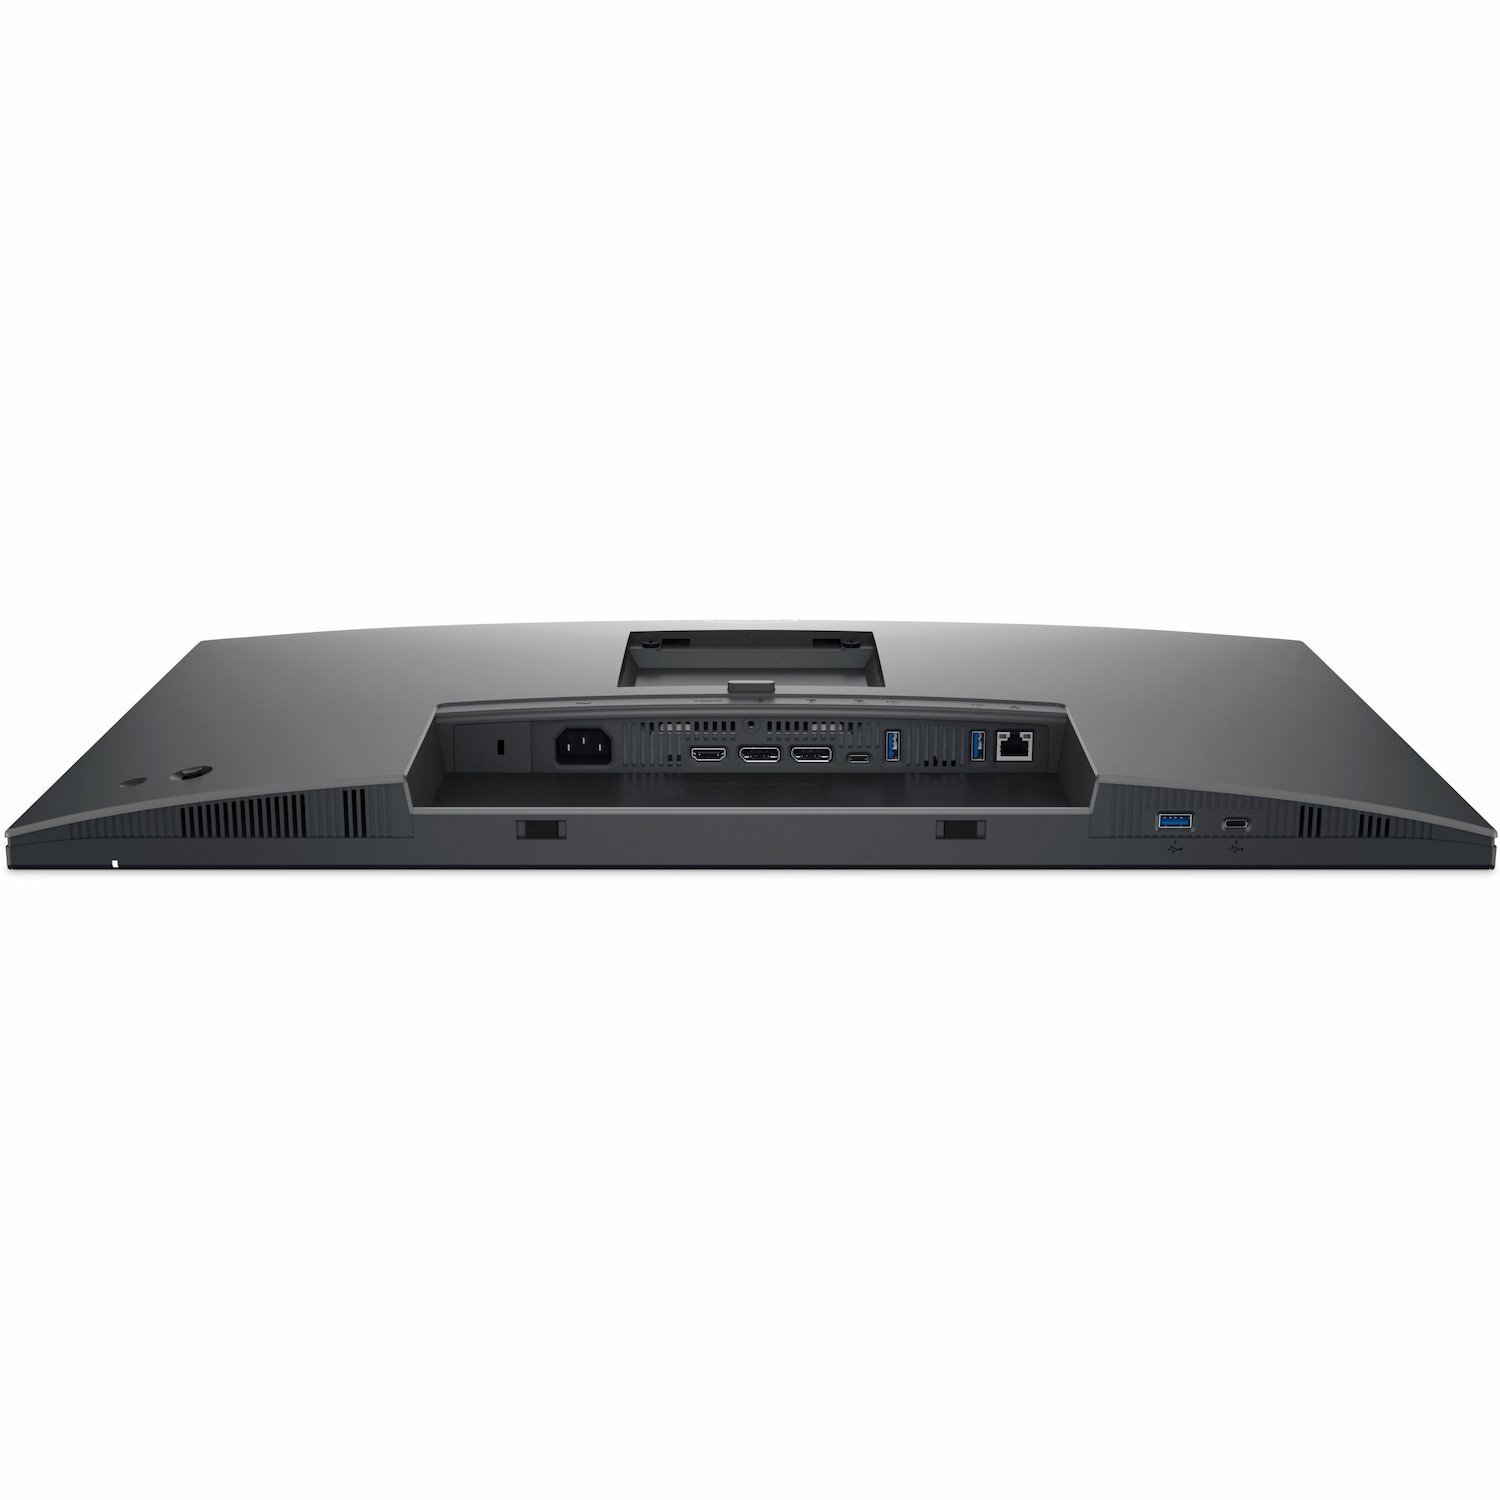 Dell P2725HE 27" Class Full HD LED Monitor - 16:9 - Black, Grey